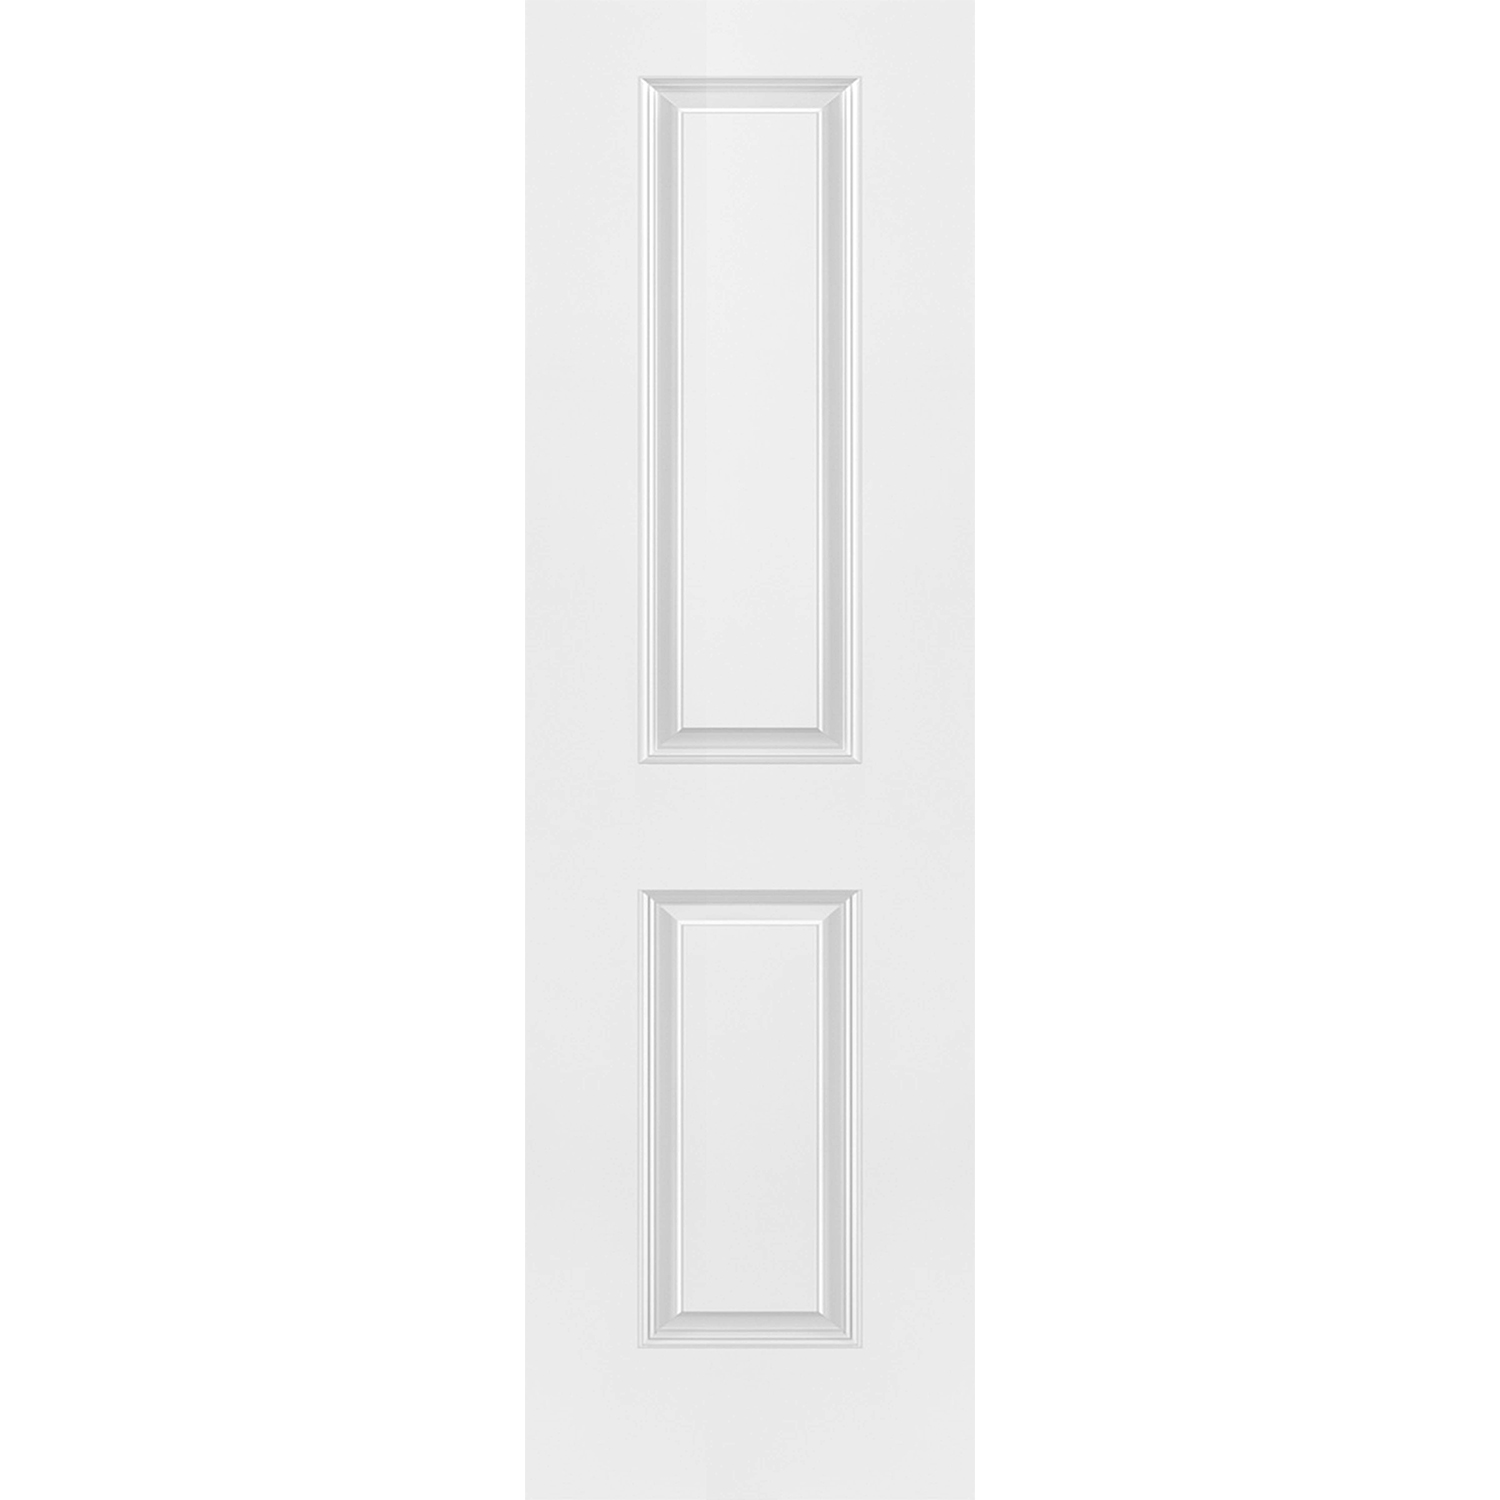 2 Panel 80 x 24 x 1-3/8 Smooth Hollow Door Raised